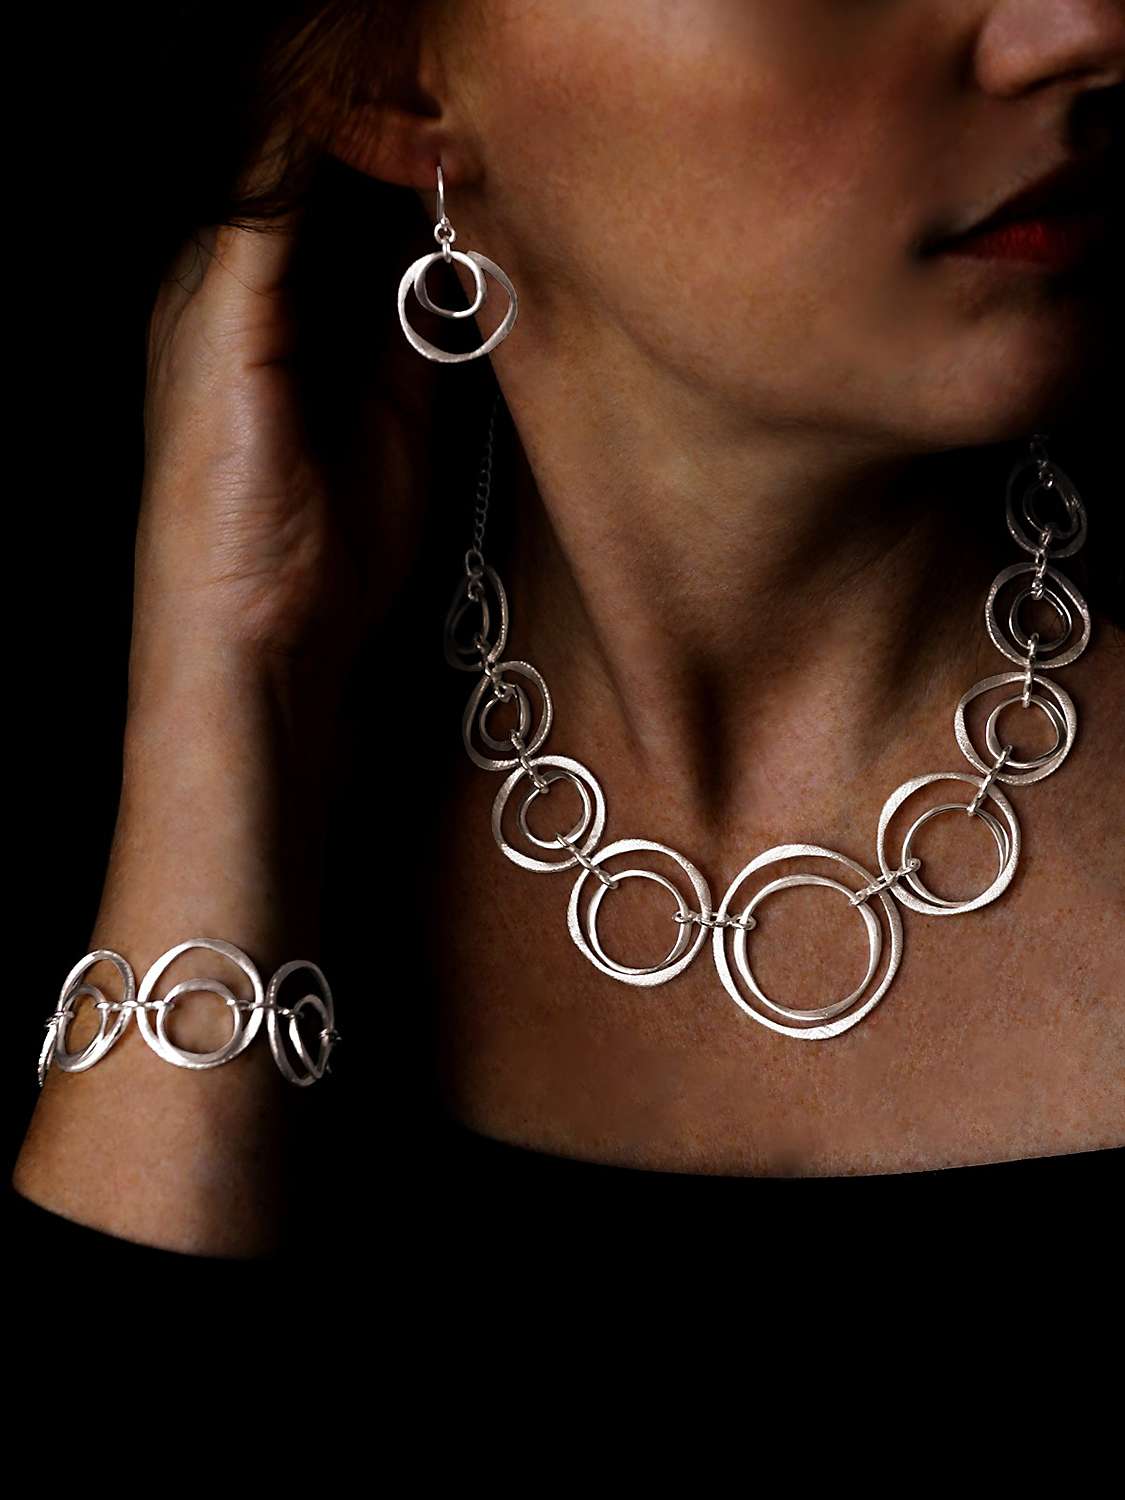 Buy Nina B Sterling Silver Open Circles Bracelet, Silver Online at johnlewis.com